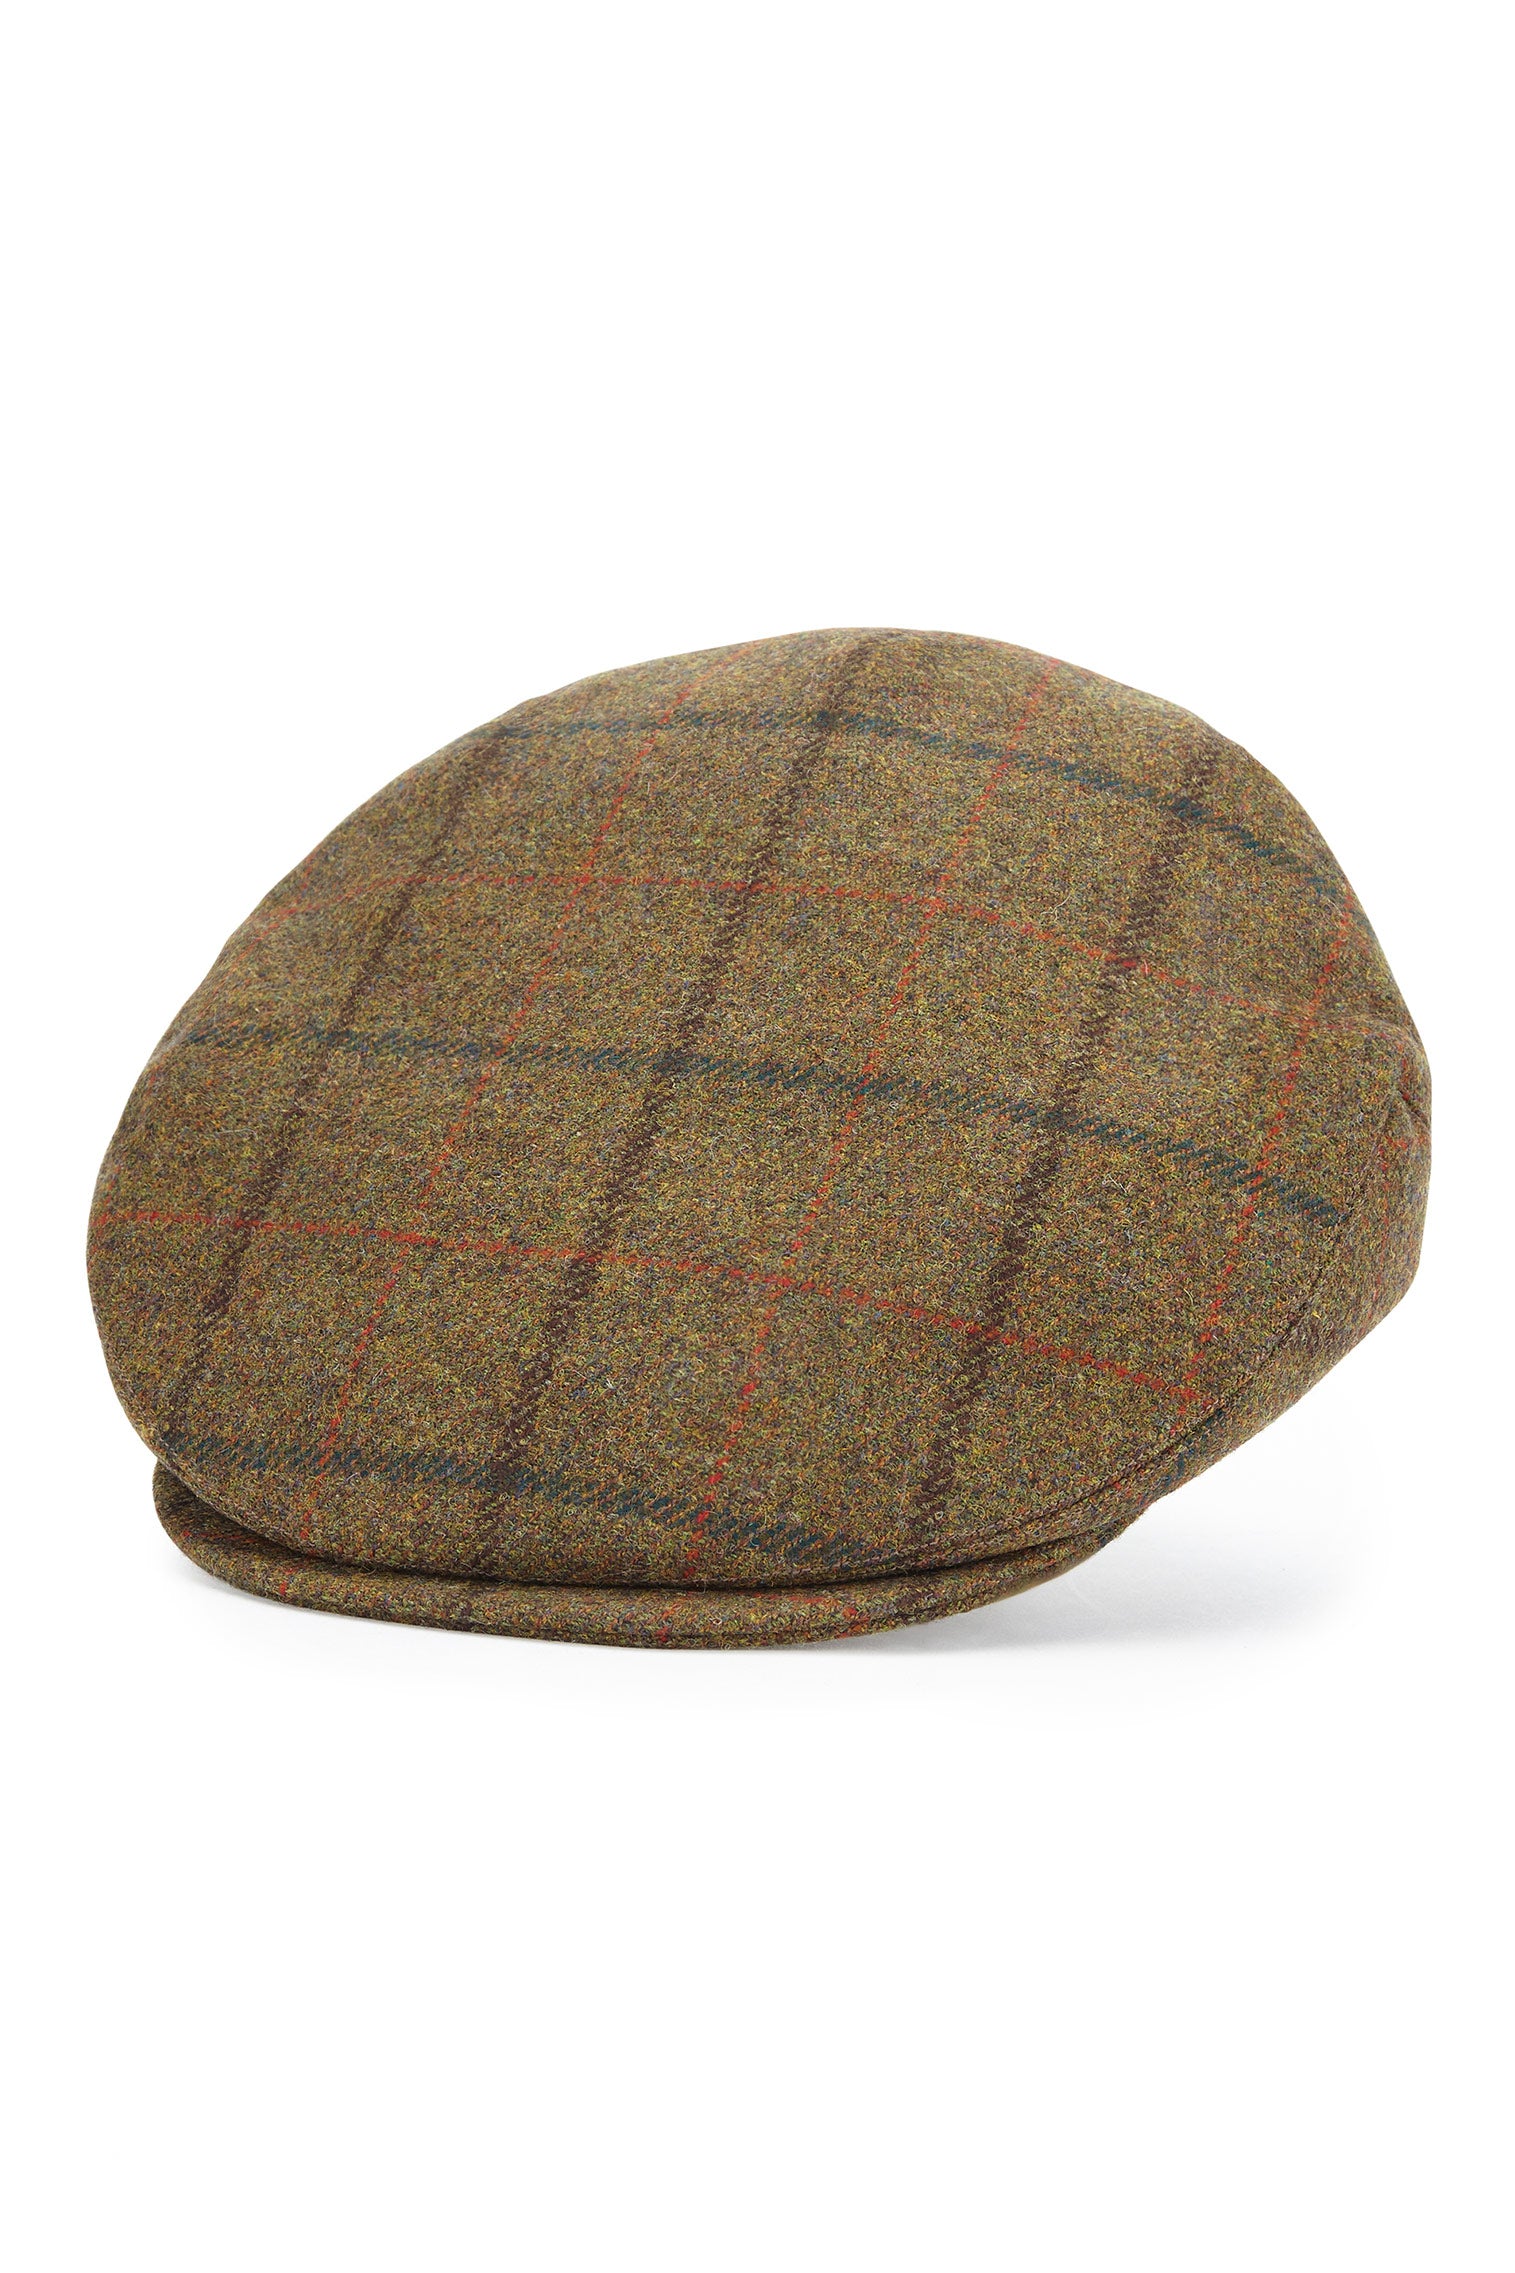 Turnberry Tweed Flat Cap - All Ready to Wear - Lock & Co. Hatters London UK